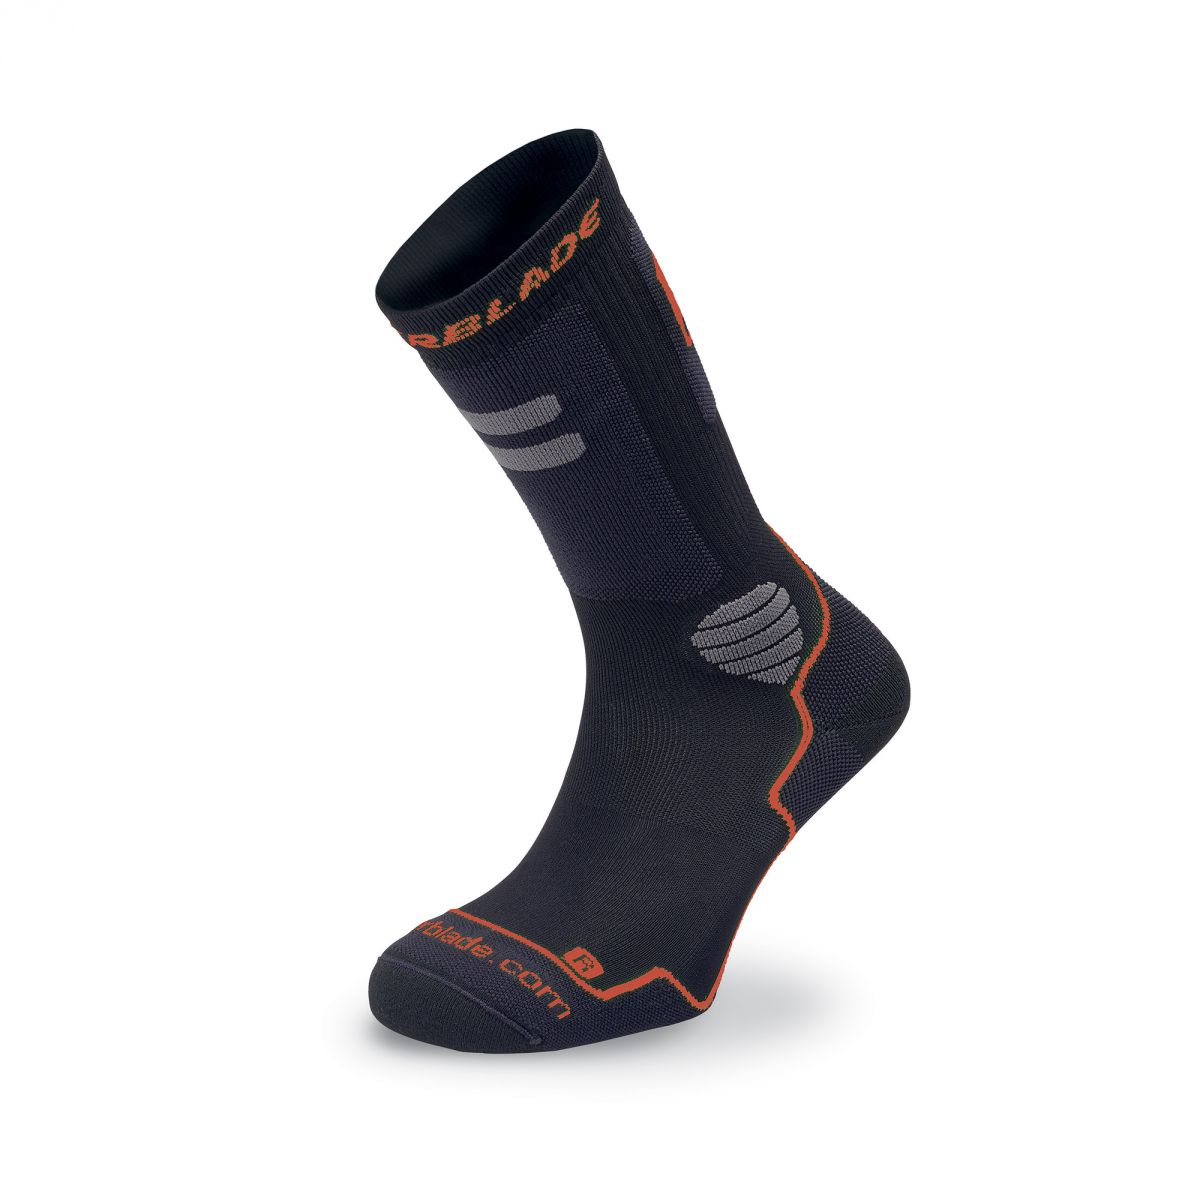 ROLLERBLADE - High perf. socks - Size L